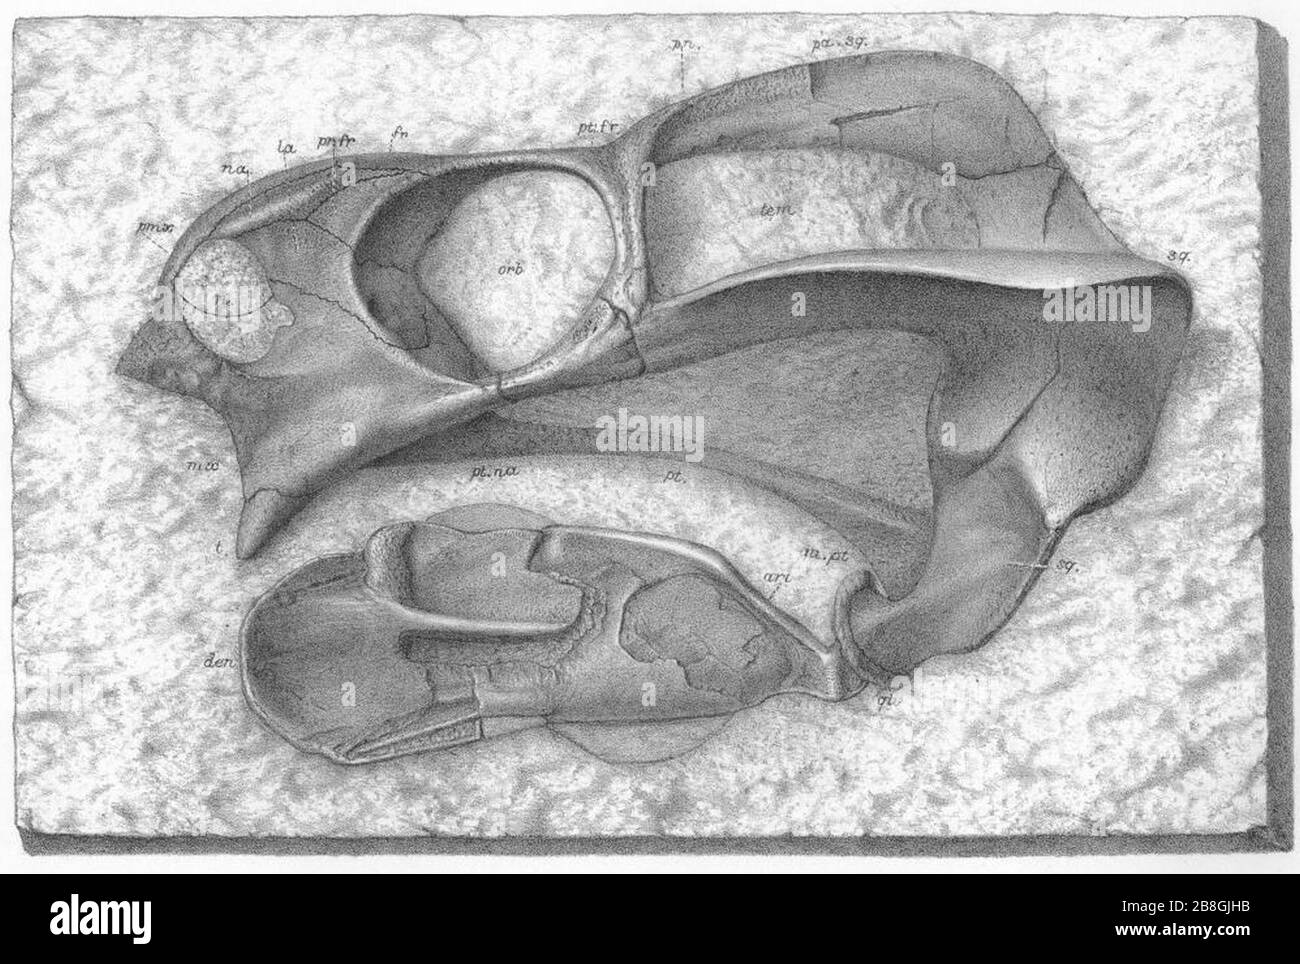 Gordonia traquairi skull Newton. Stock Photo